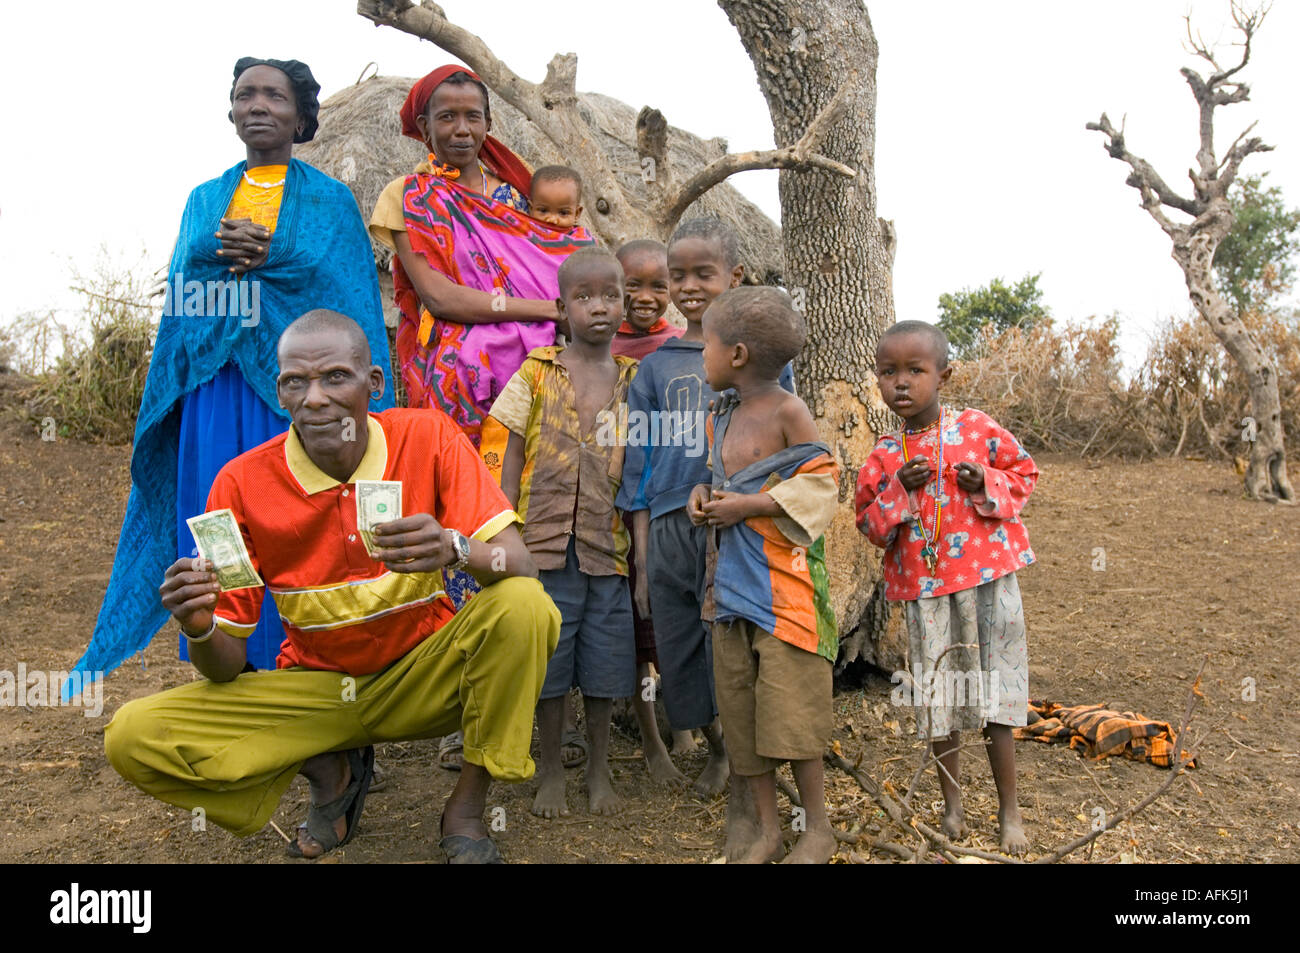 masai massai Massai Maasai, Maassai PAY DOLLARS FOR A FOTO  CHYULU MOUNTAINS Kenya kenia East Africa afrika Taita Hills  infant Stock Photo